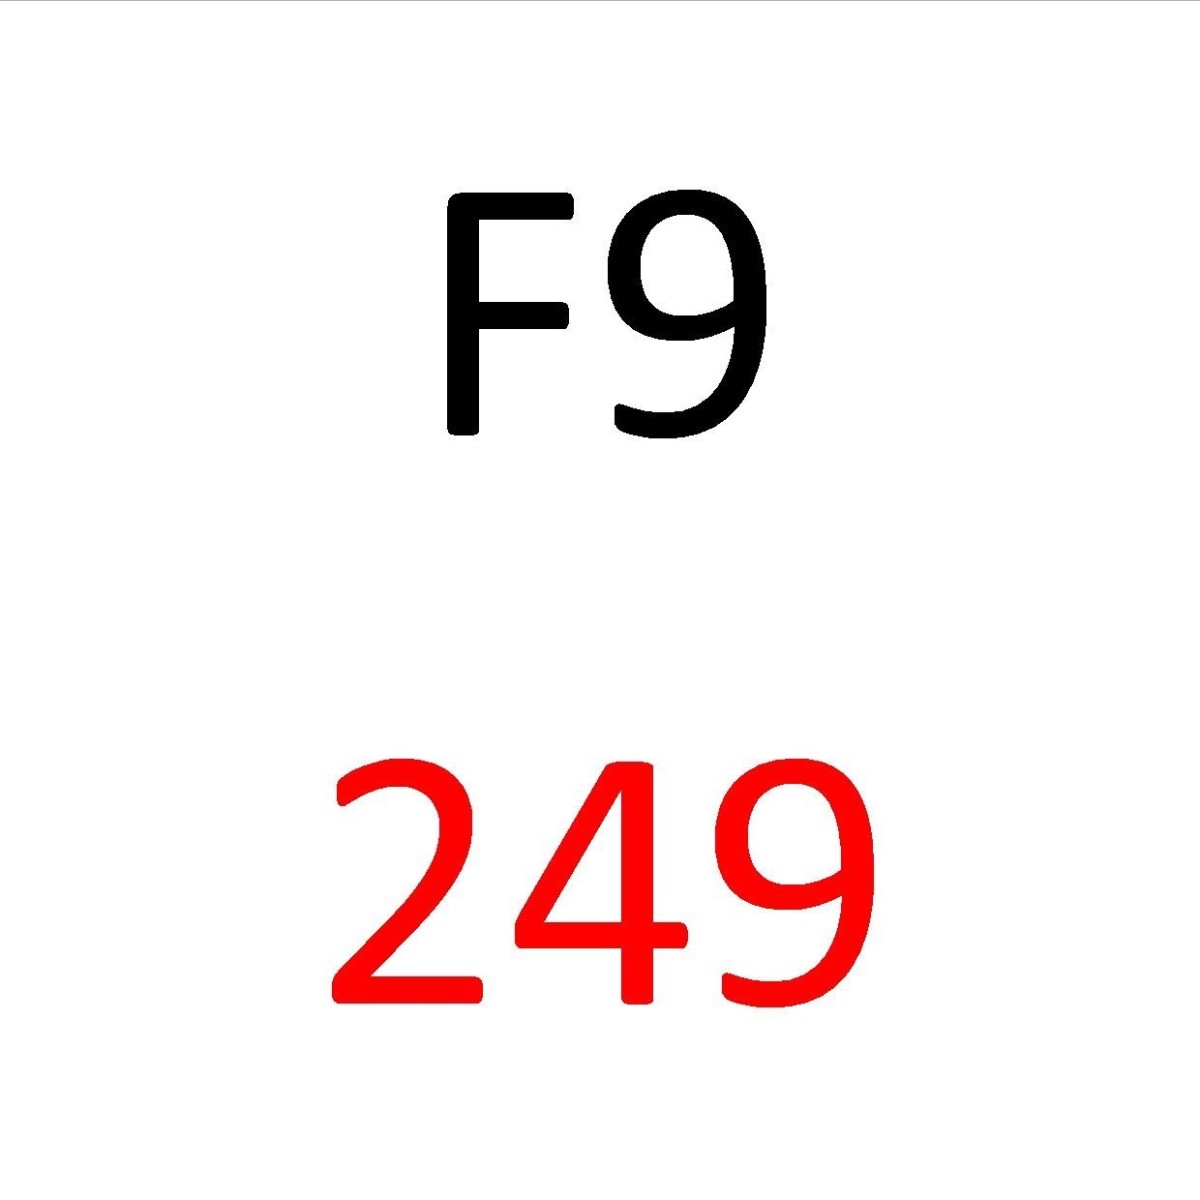 249 in Hexadecimal and Decimal